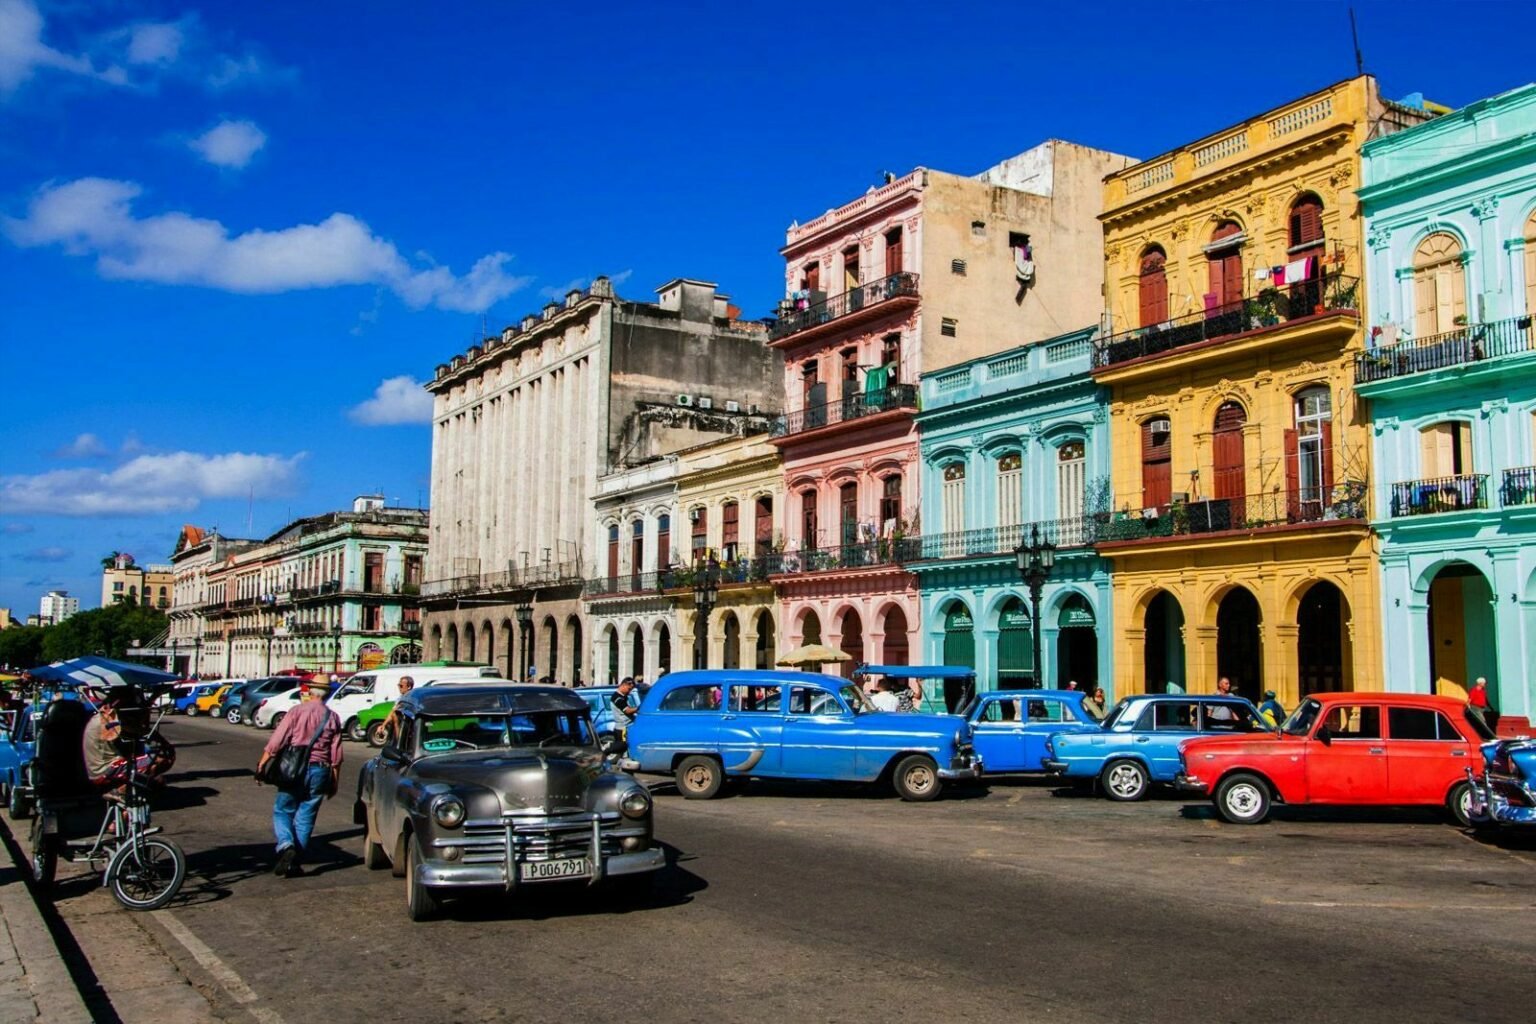 Красоты Кубы